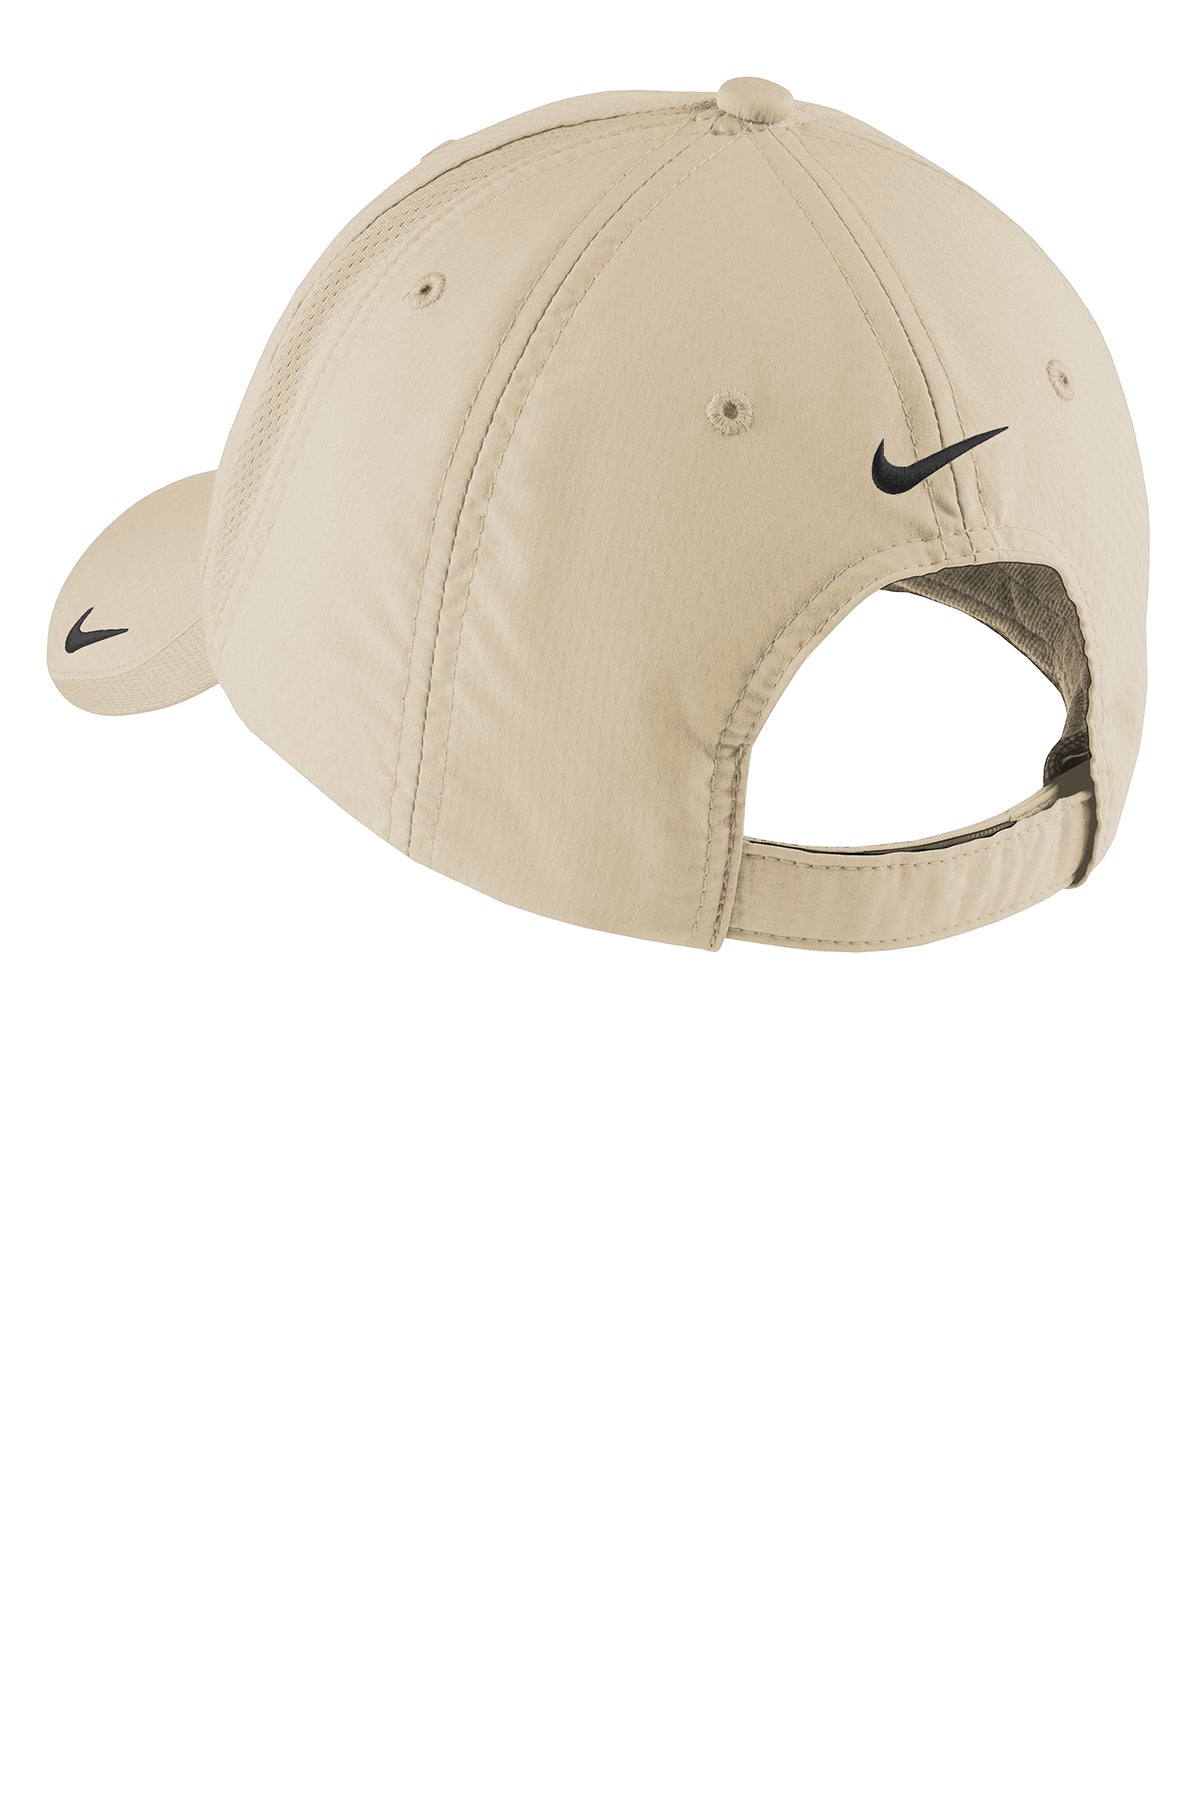 Nike Sphere Dry Custom Caps, Birch